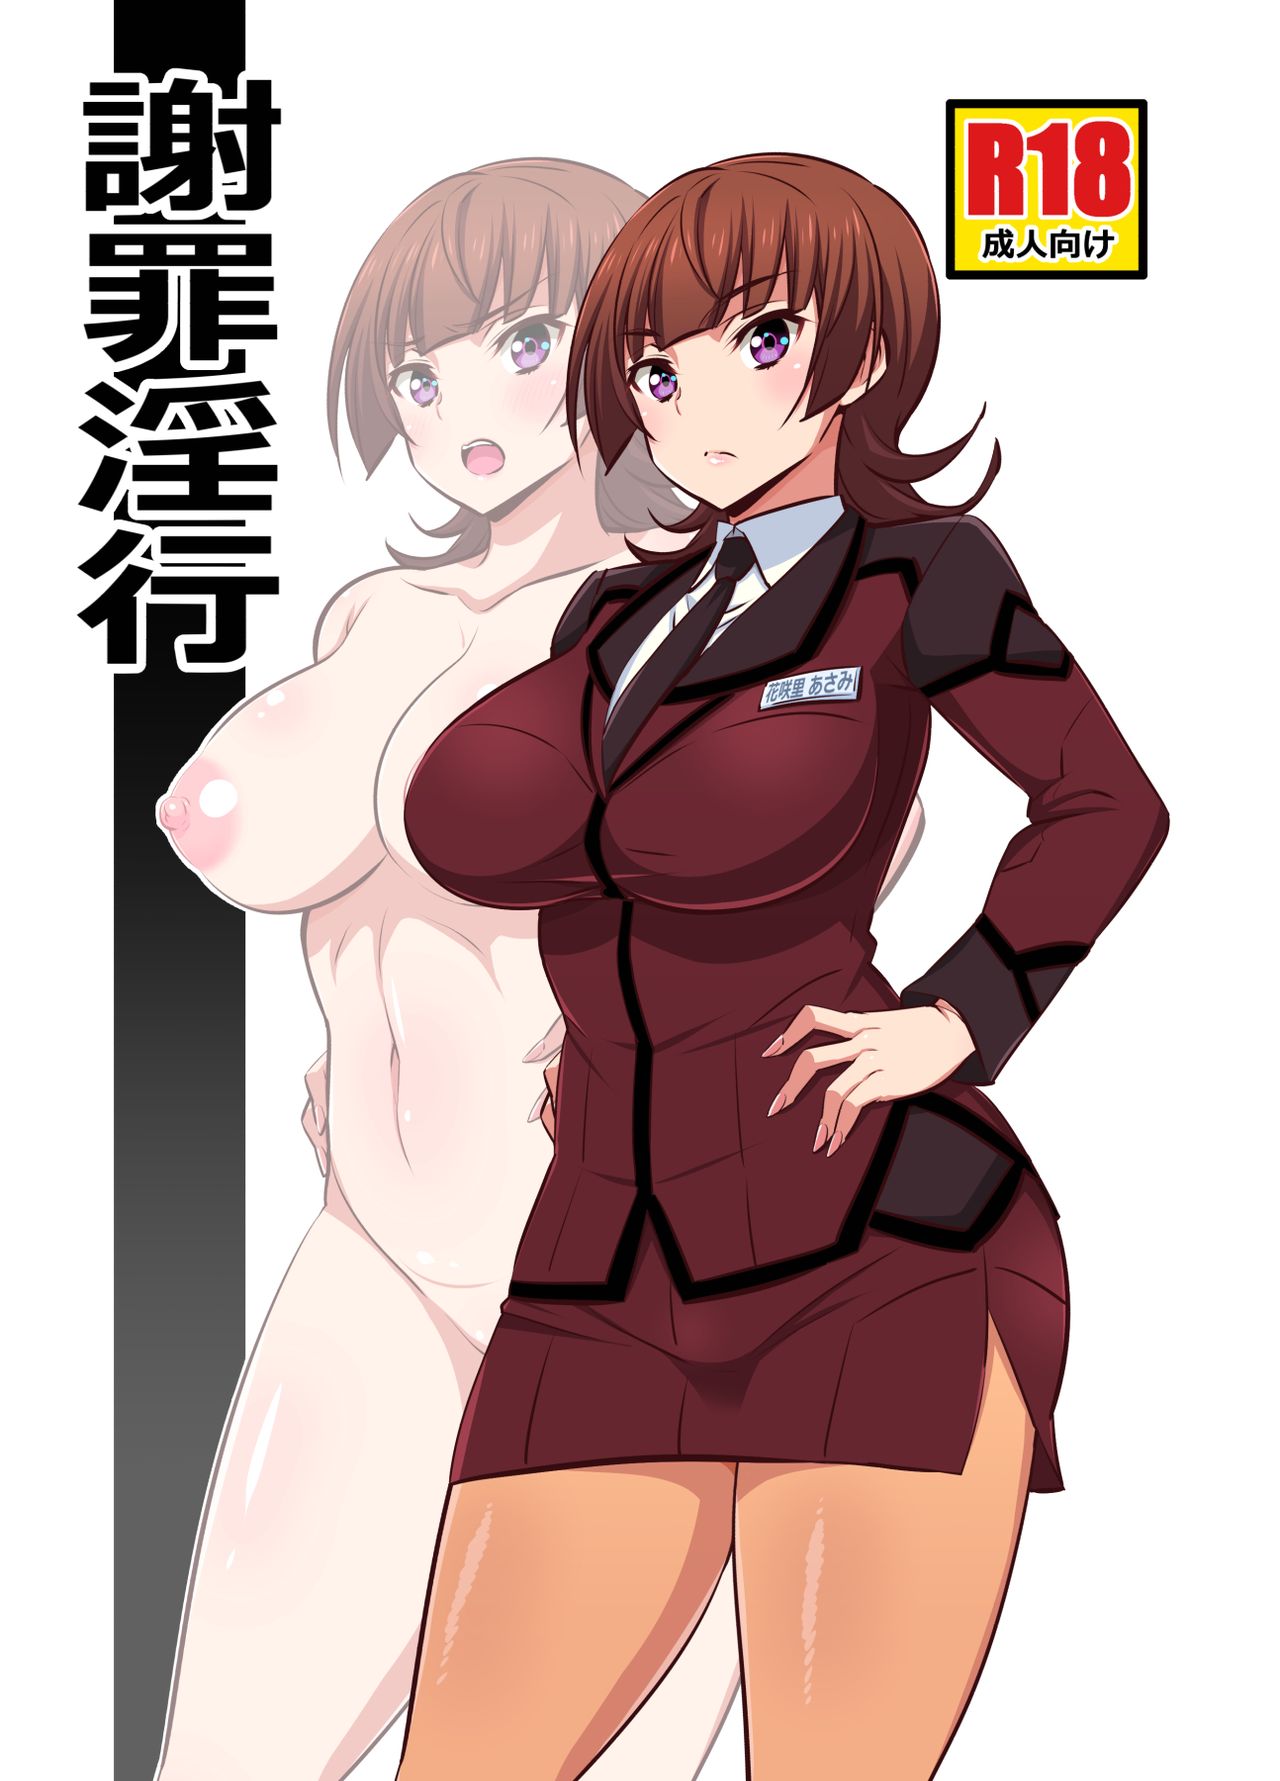 Active Raid Porn Comics Â» Hentai Porns - Manga And Porncomics Xxx Hentai  Comics